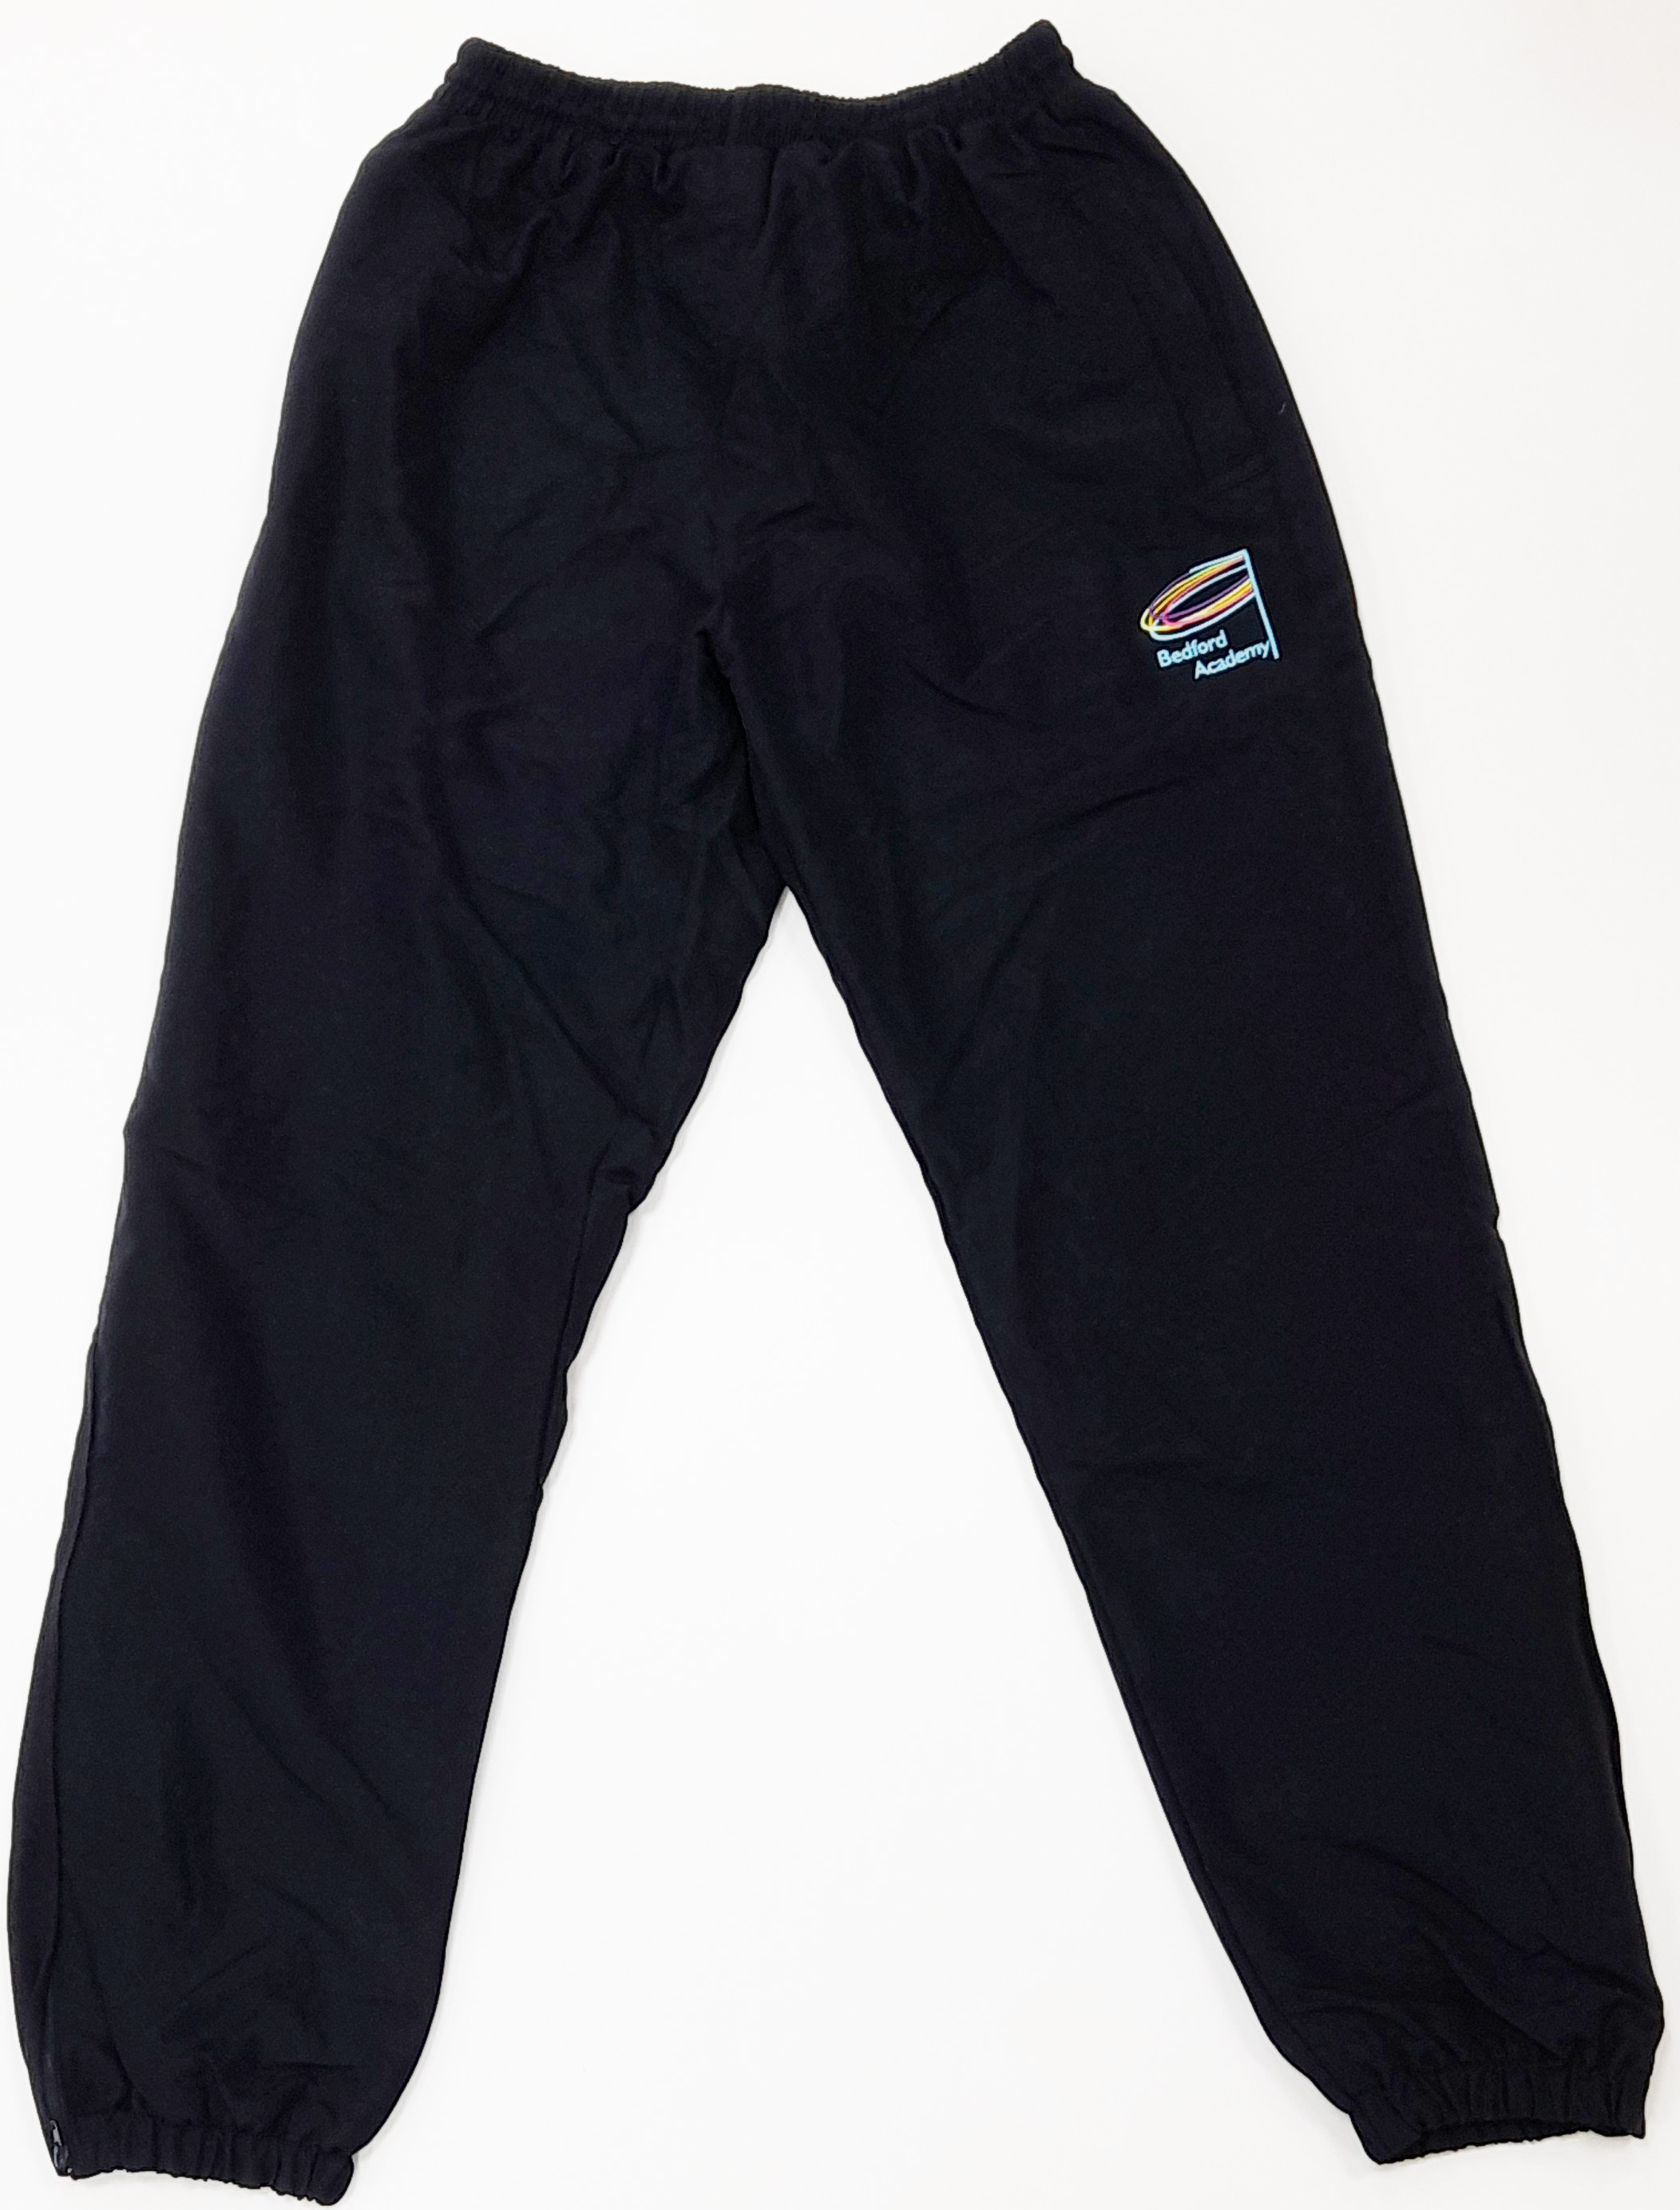 Bedford Academy Unisex Sport Trouser (Navy)